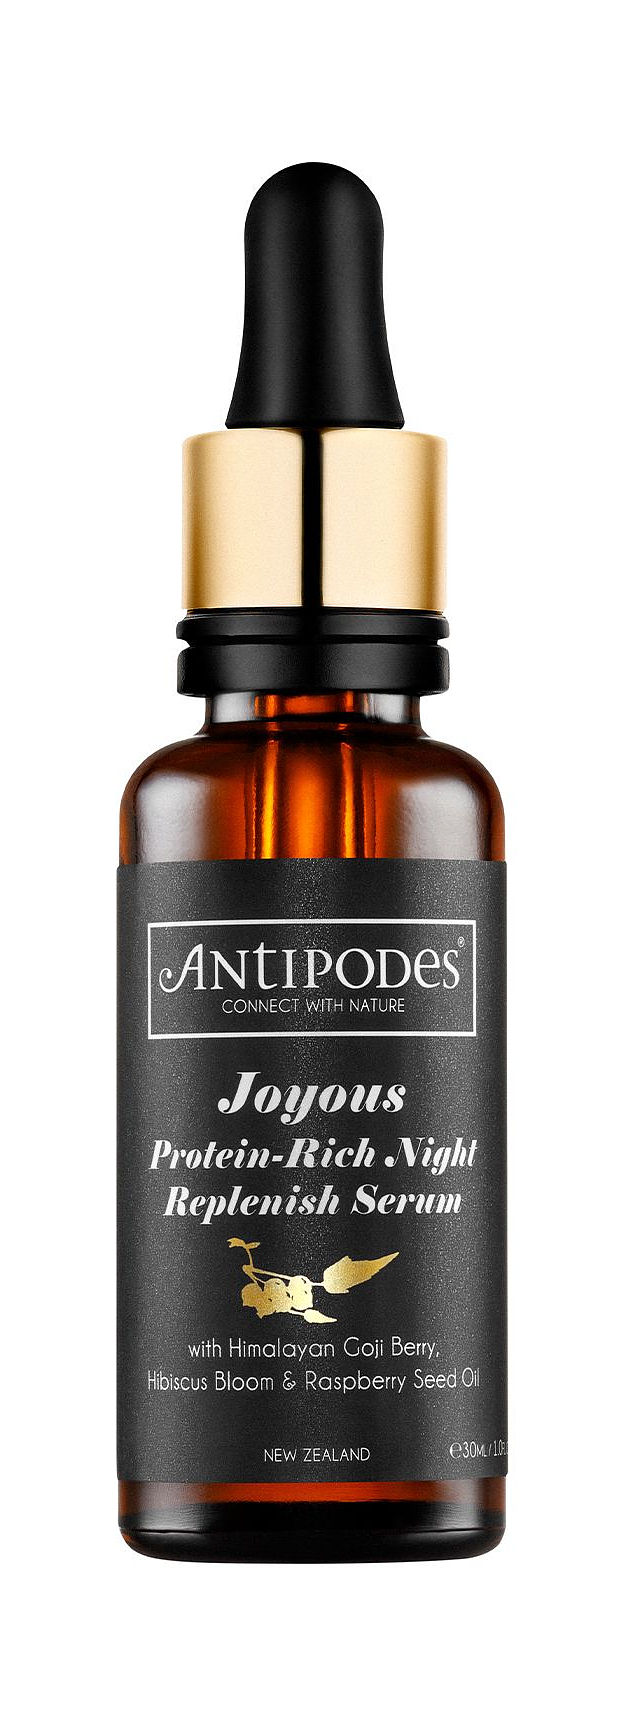 Antipodes Joyous Protein-rich Night Replenish Serum 30ml